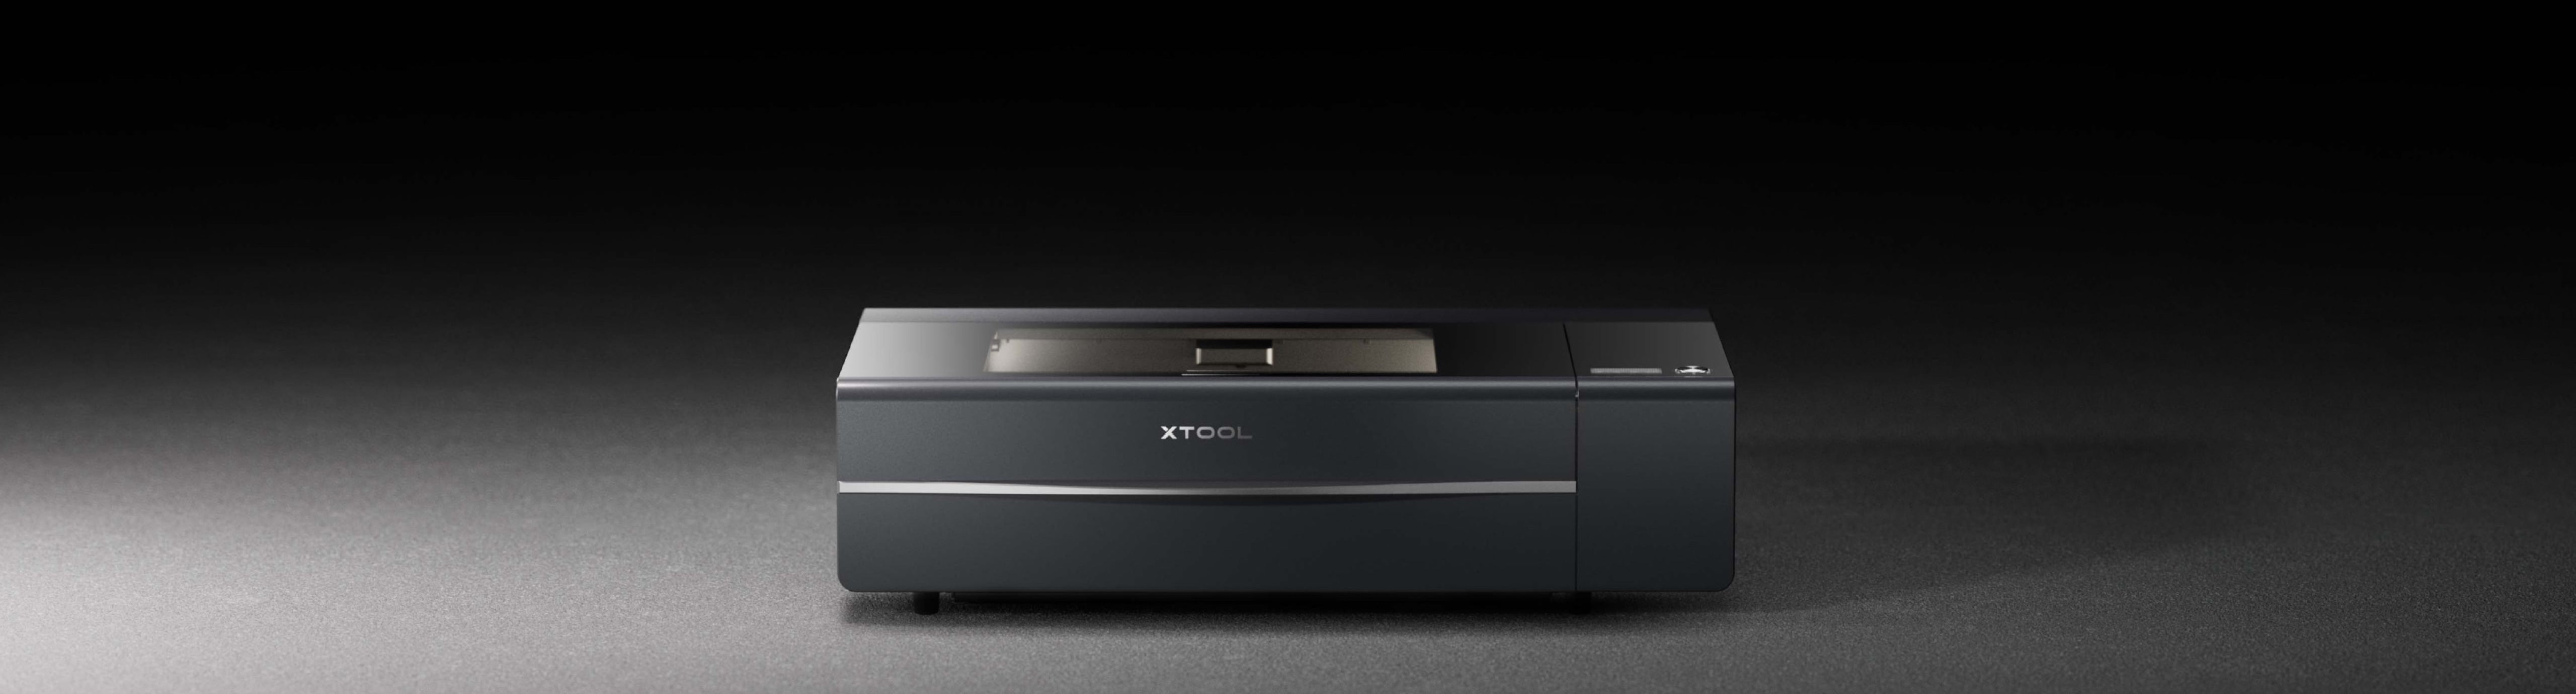 xTool D1 Pro 2.0 Desktop Laser Engraver Cutting Machine - Grey